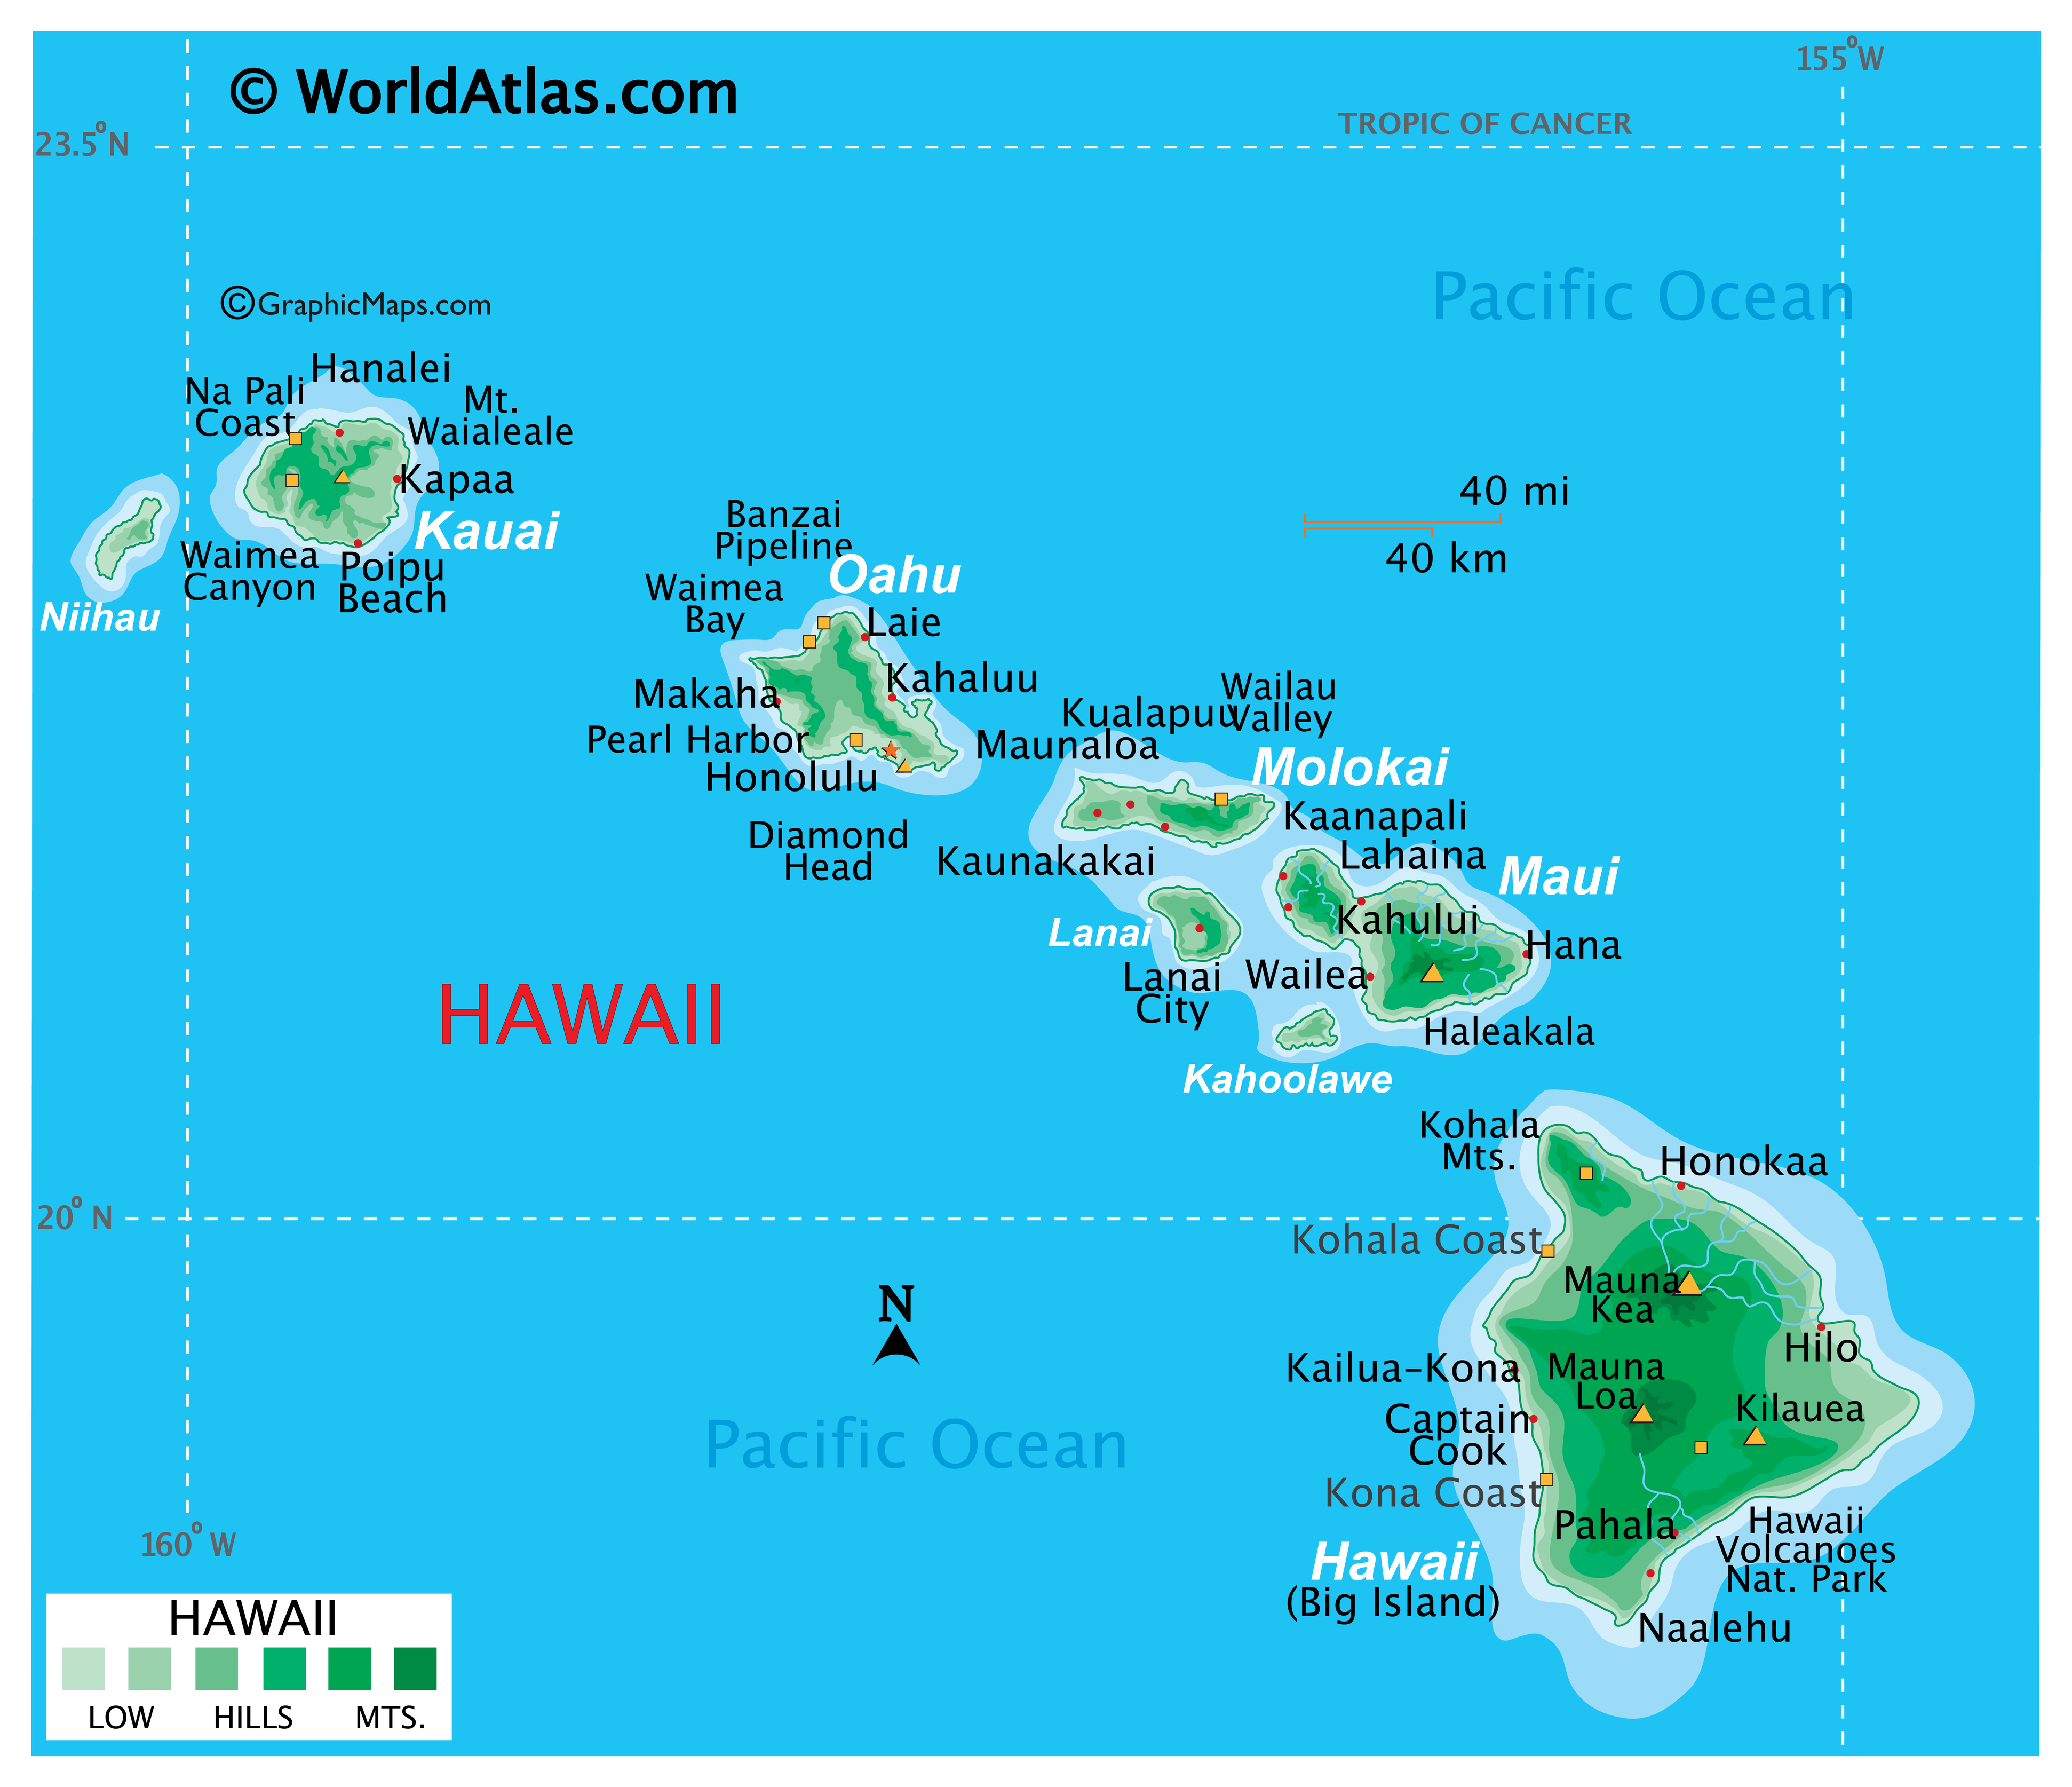 Geography of Hawaii - World Atlas